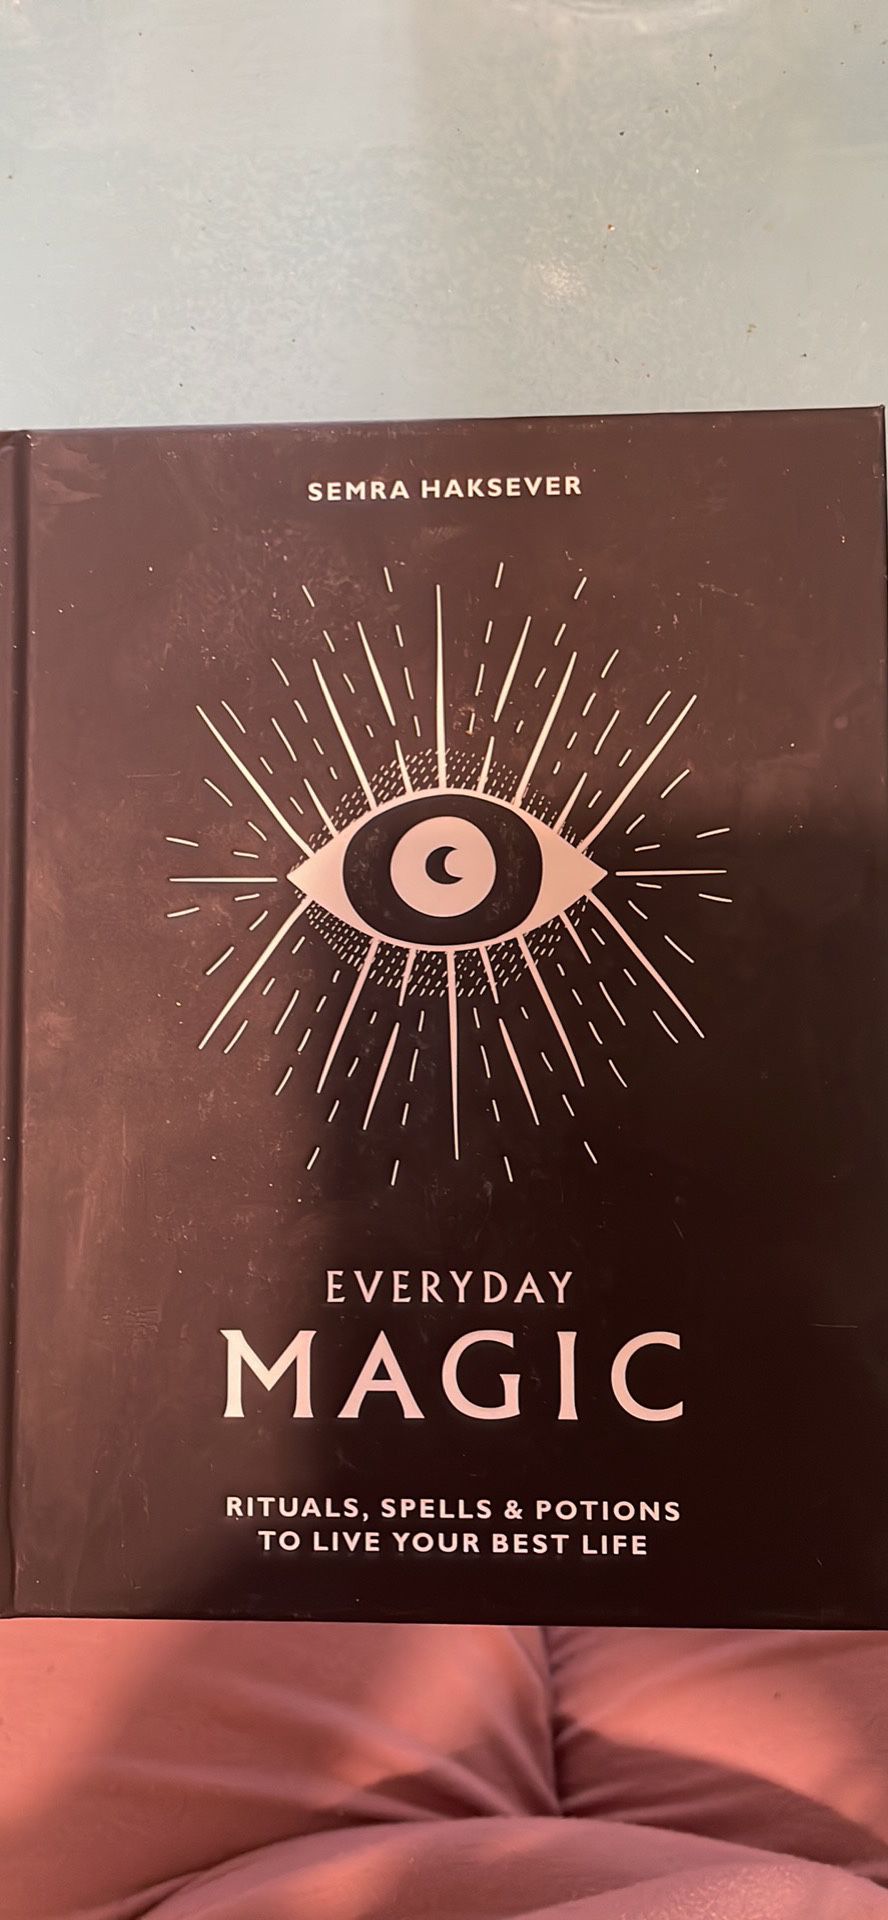 Everyday Magic book